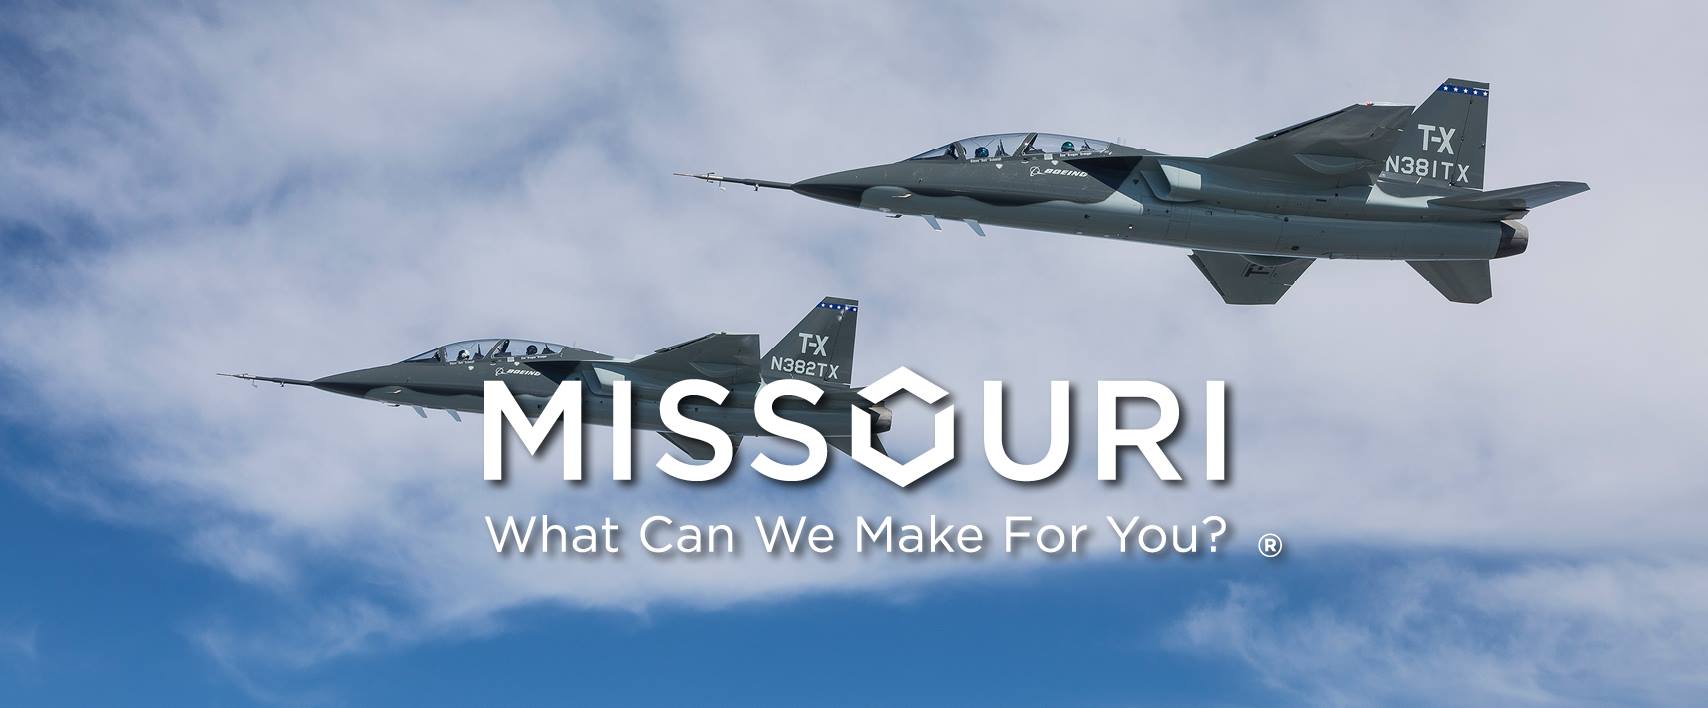 Missouri Partnership Cover